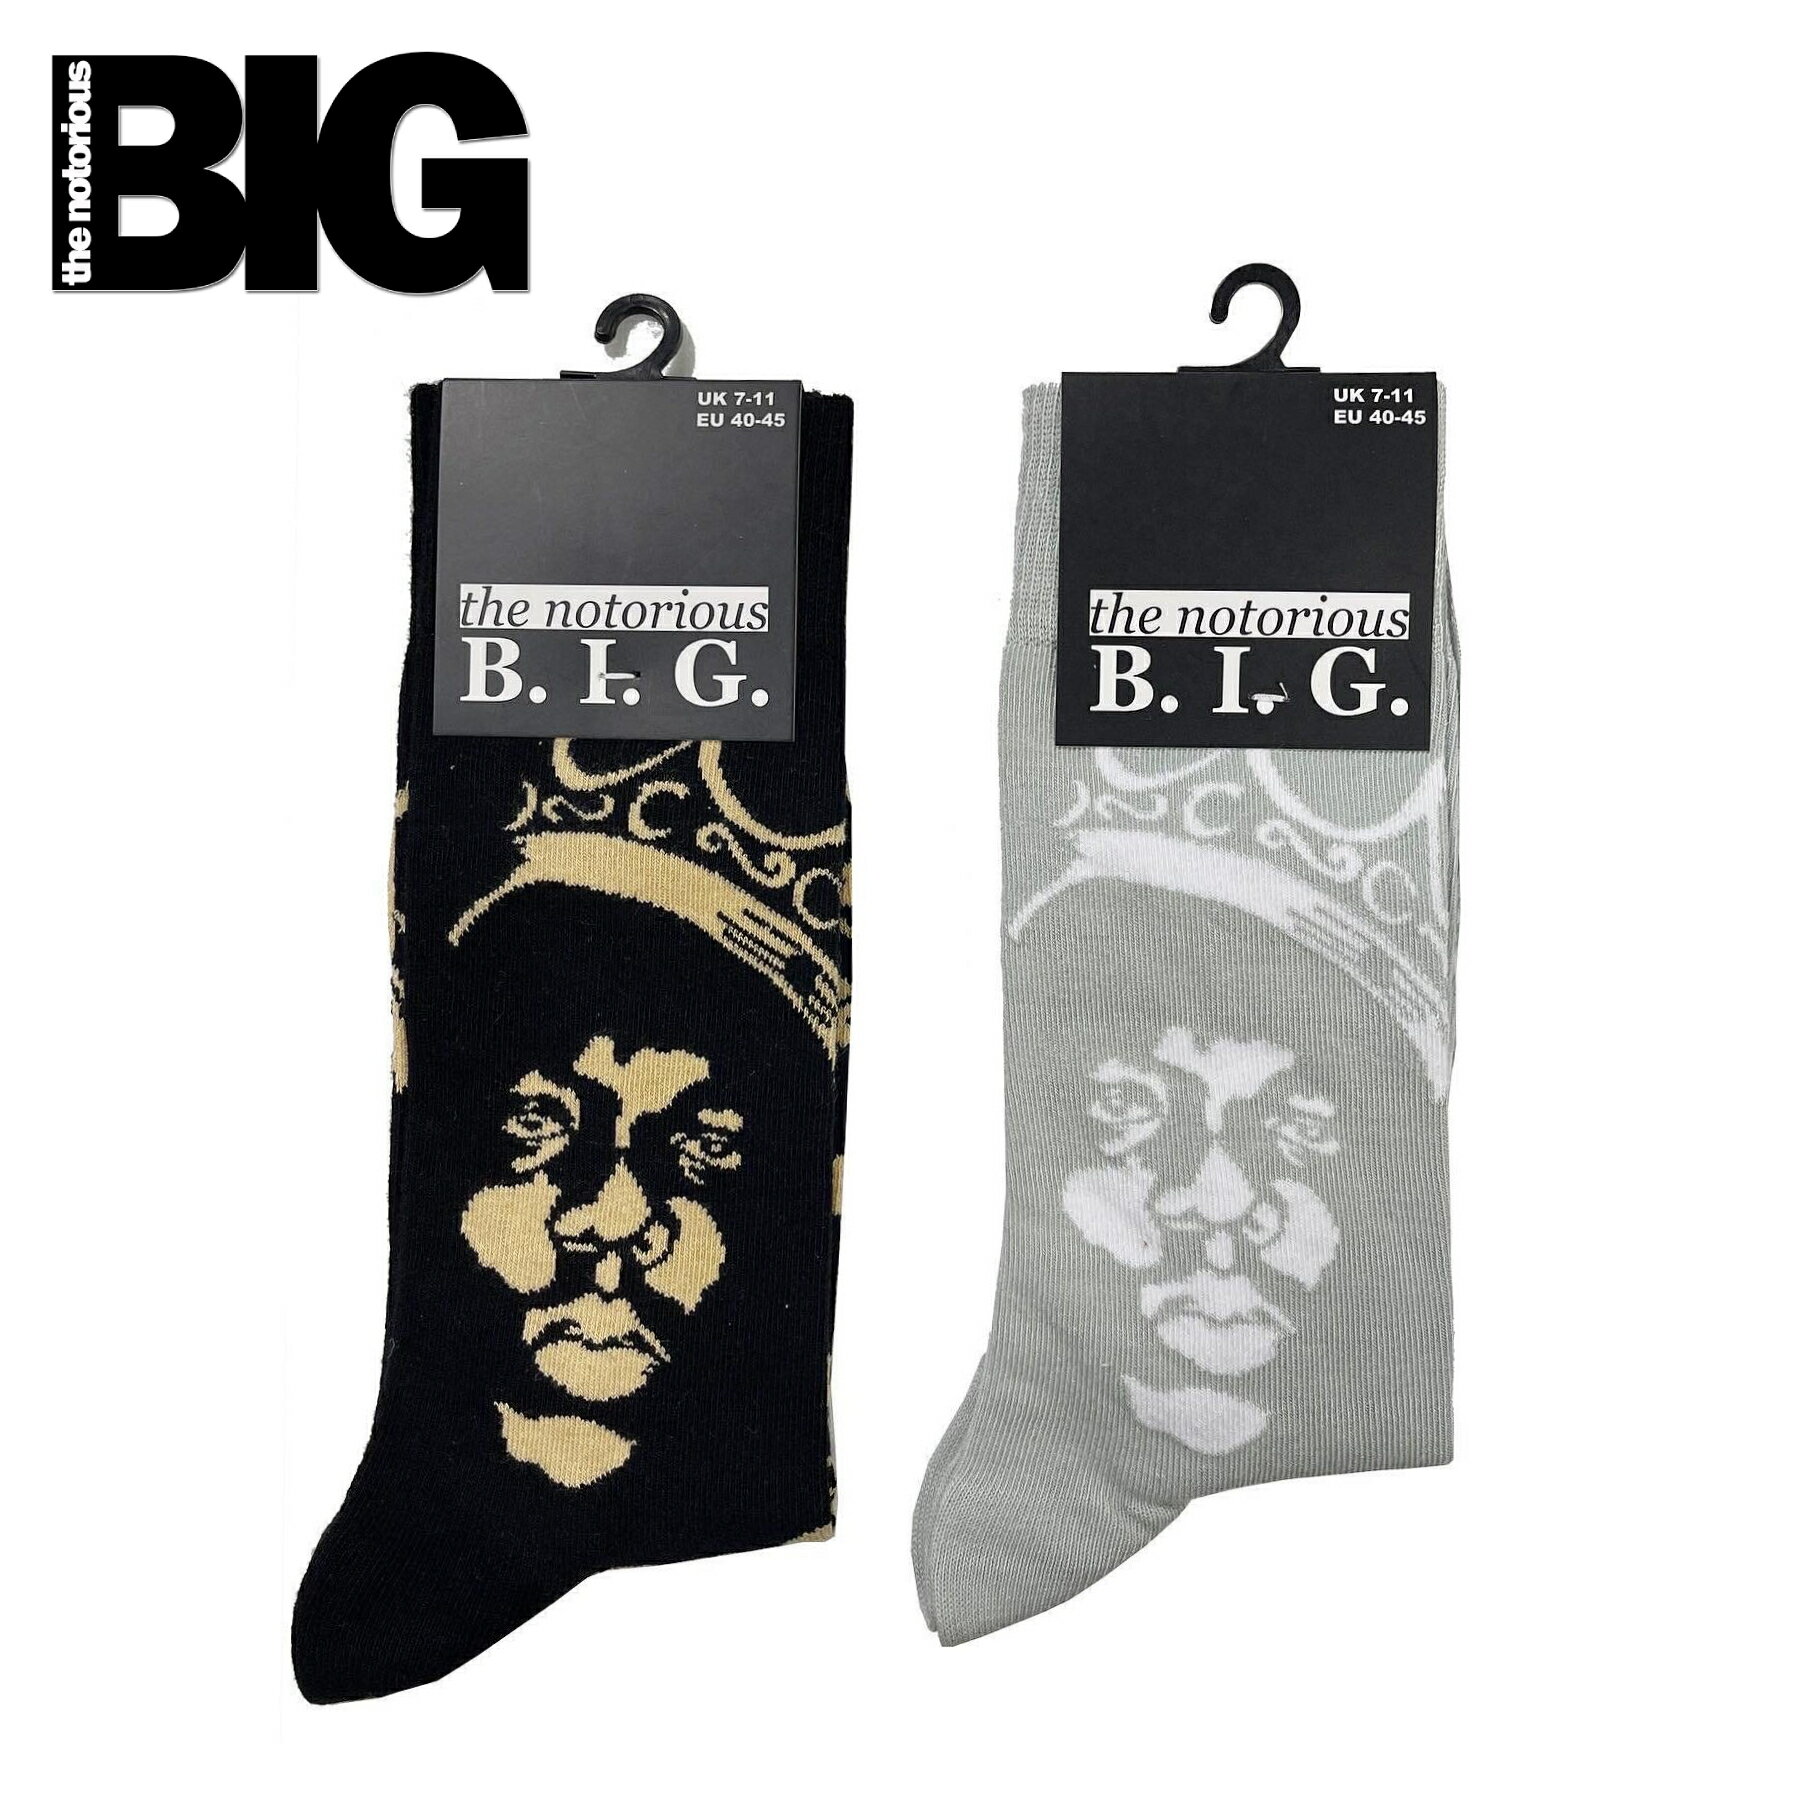 Notorious B.I.G. NOTORIOUS ライセンス オフィシャル ソックス ブラック グレー 公式 黒 灰 靴下 SOCKS Black Grey ノトーリアス・B.I.G. ビギー・スモールズ サイズ25cm-29cm